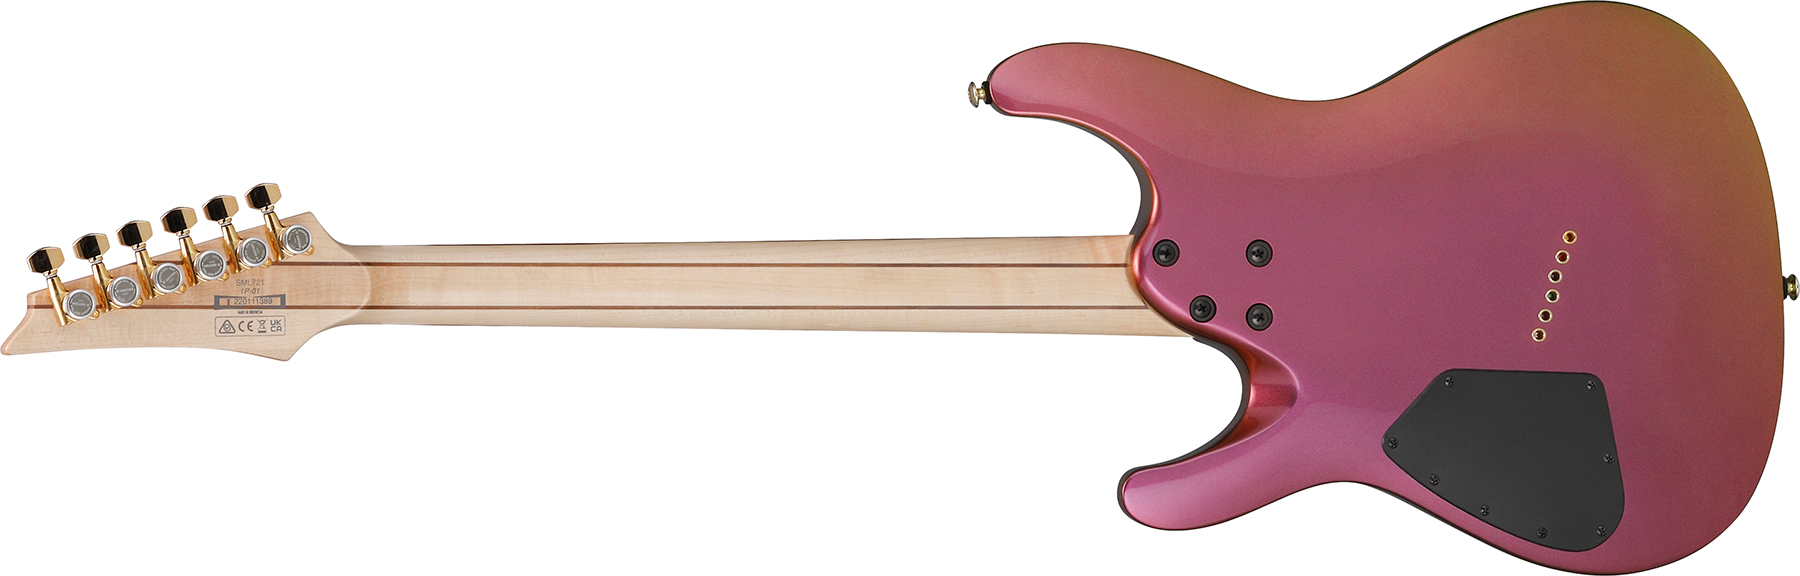 Ibanez Sml721 Rgc Axe Design Lab Multiscale 2h Ht Rw - Rose Gold Chameleon - Multi-scale gitaar - Variation 1